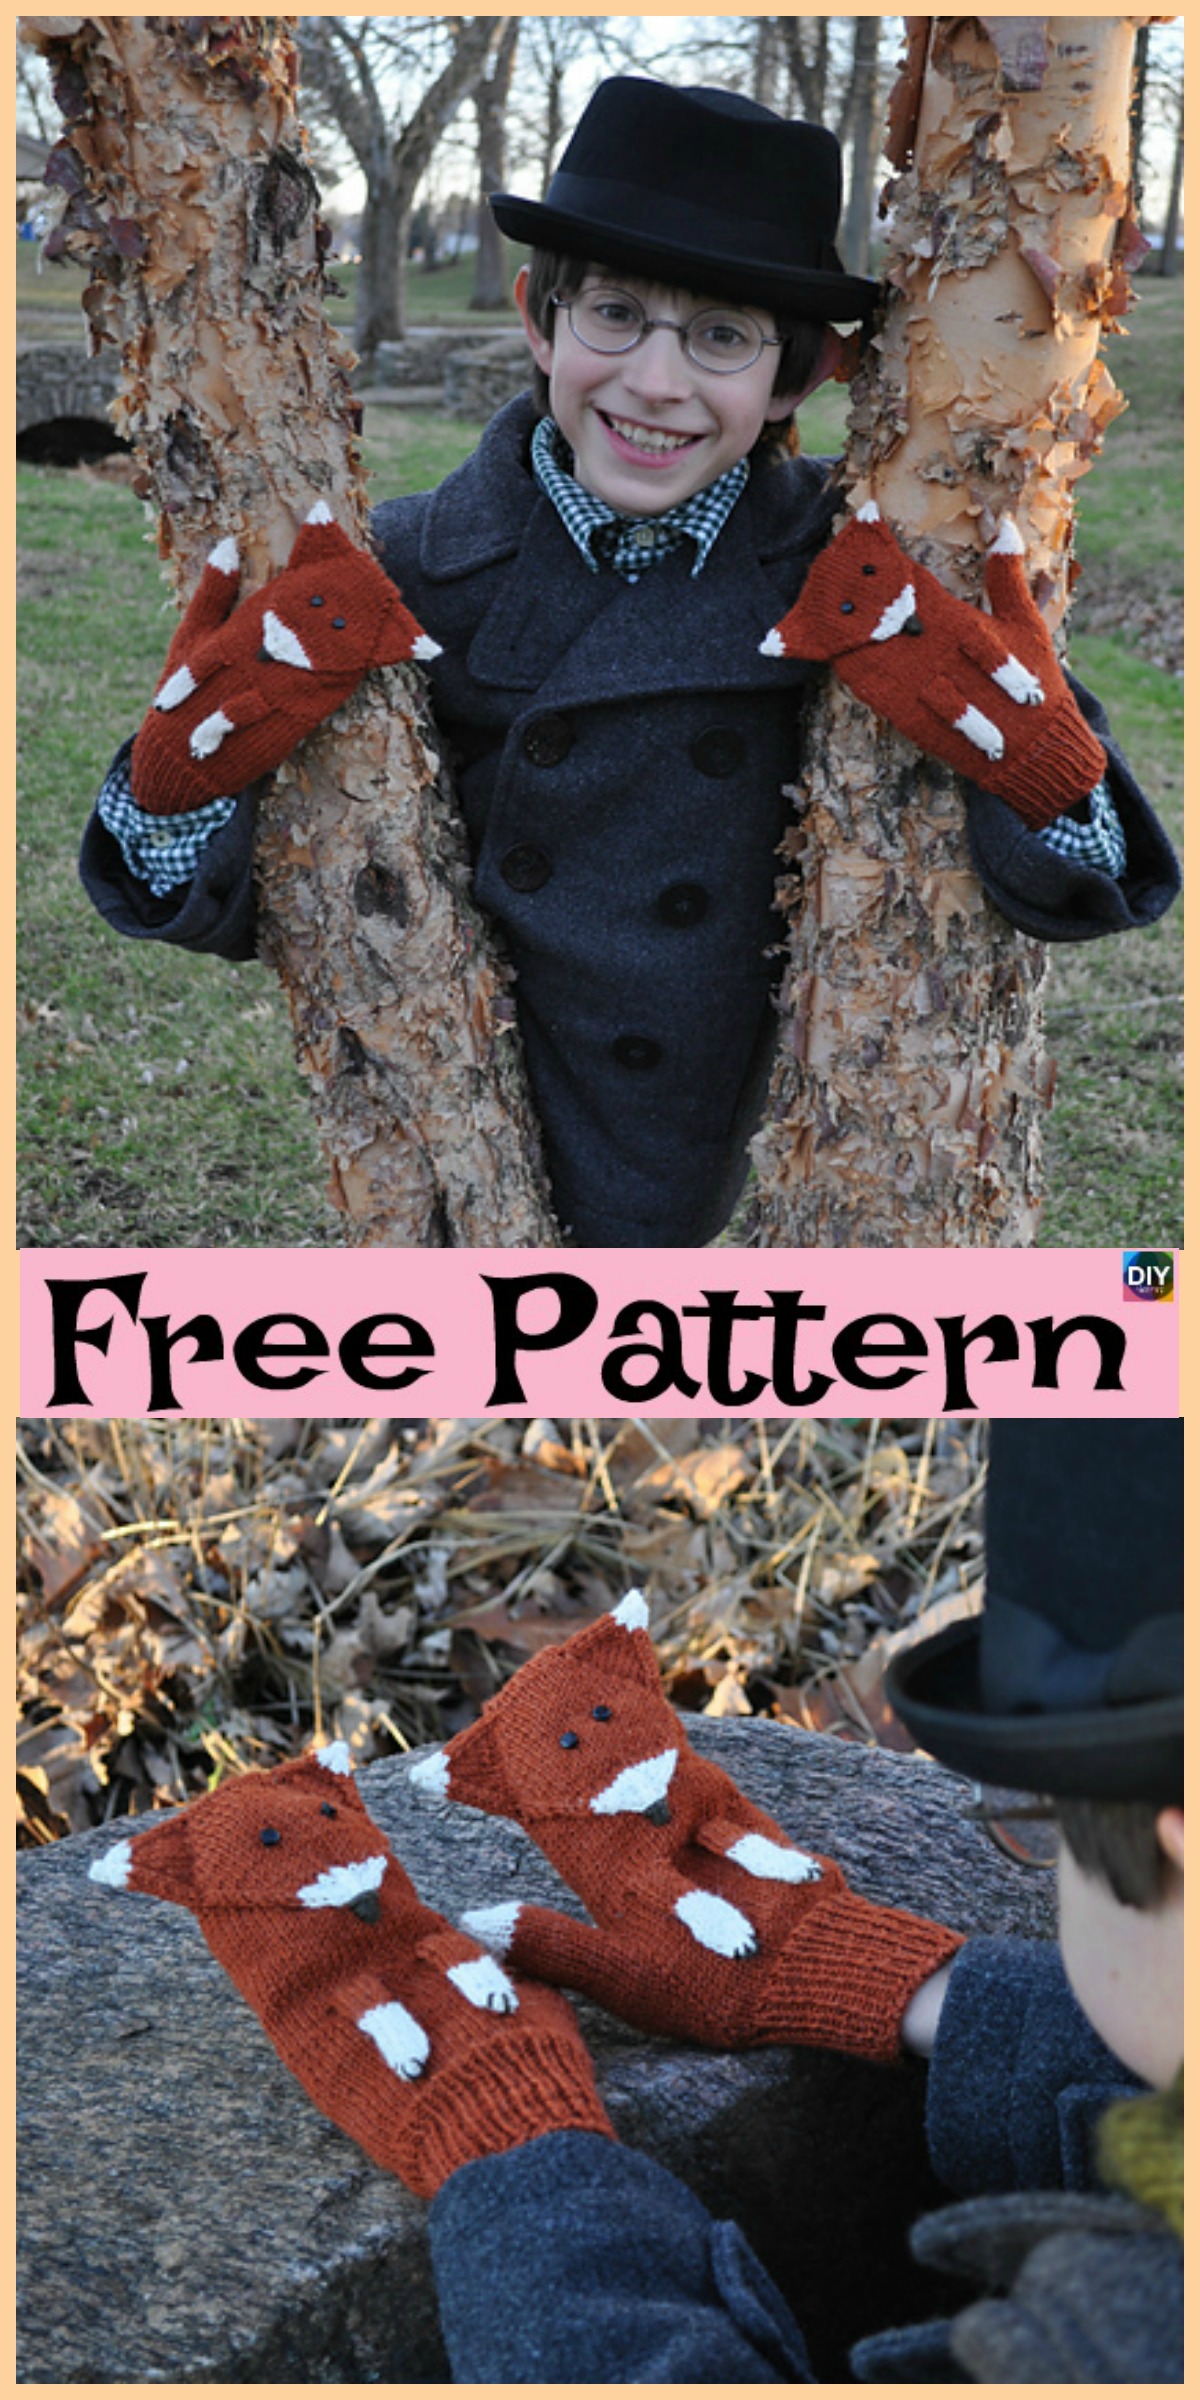 diy4ever-Knit Crochet Fox Mittens - Free Patterns 